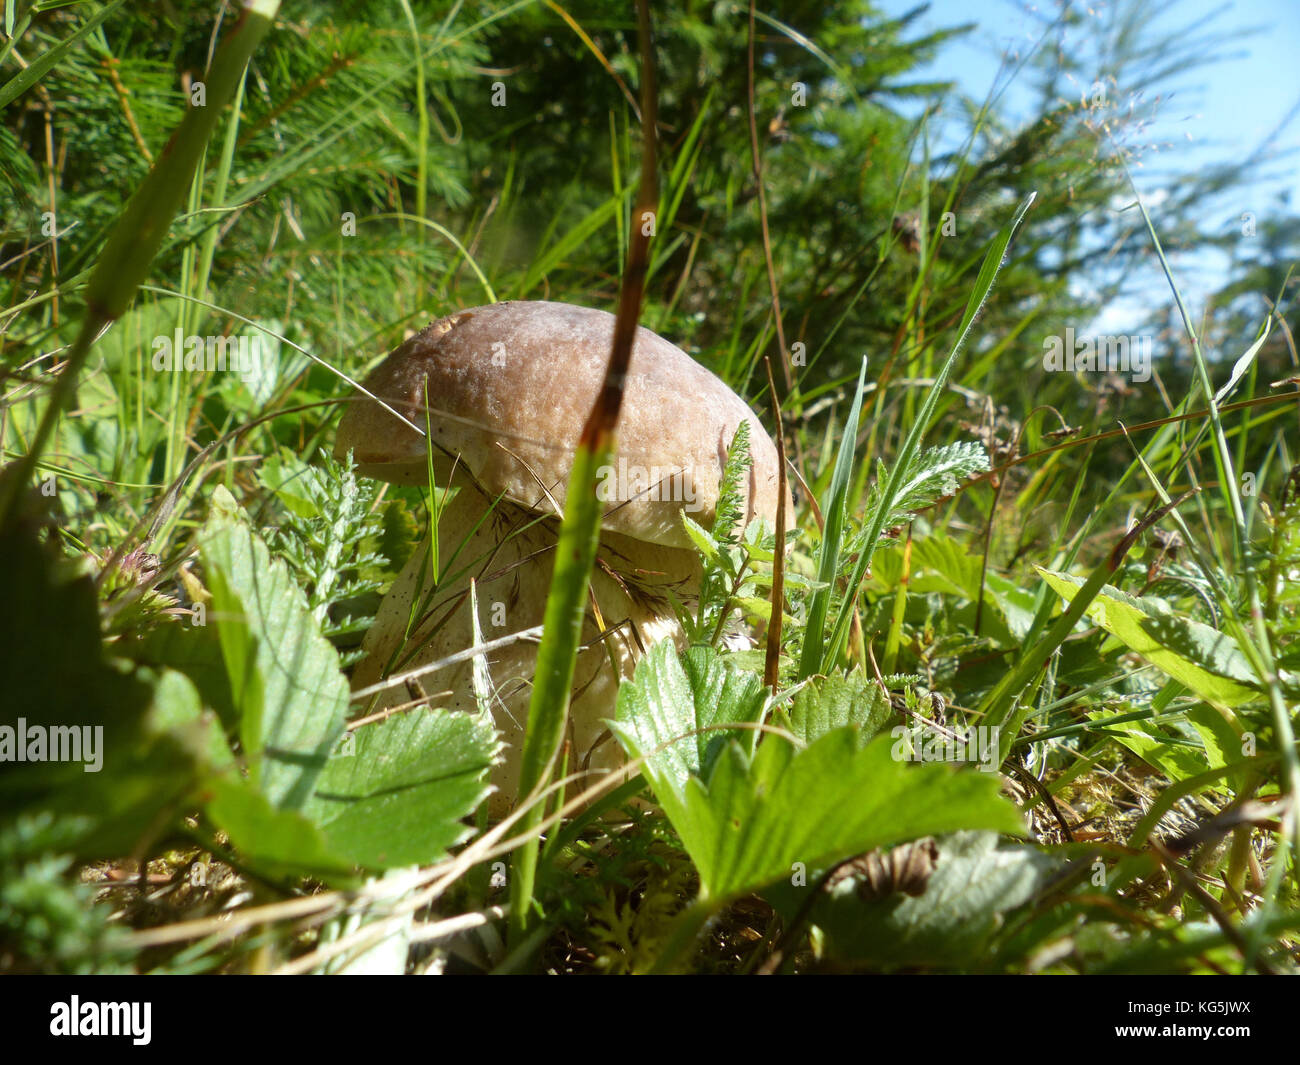 Wild mushroom growing in grass, picking wild mushroom is a national hobby in Czech republic Stock Photo